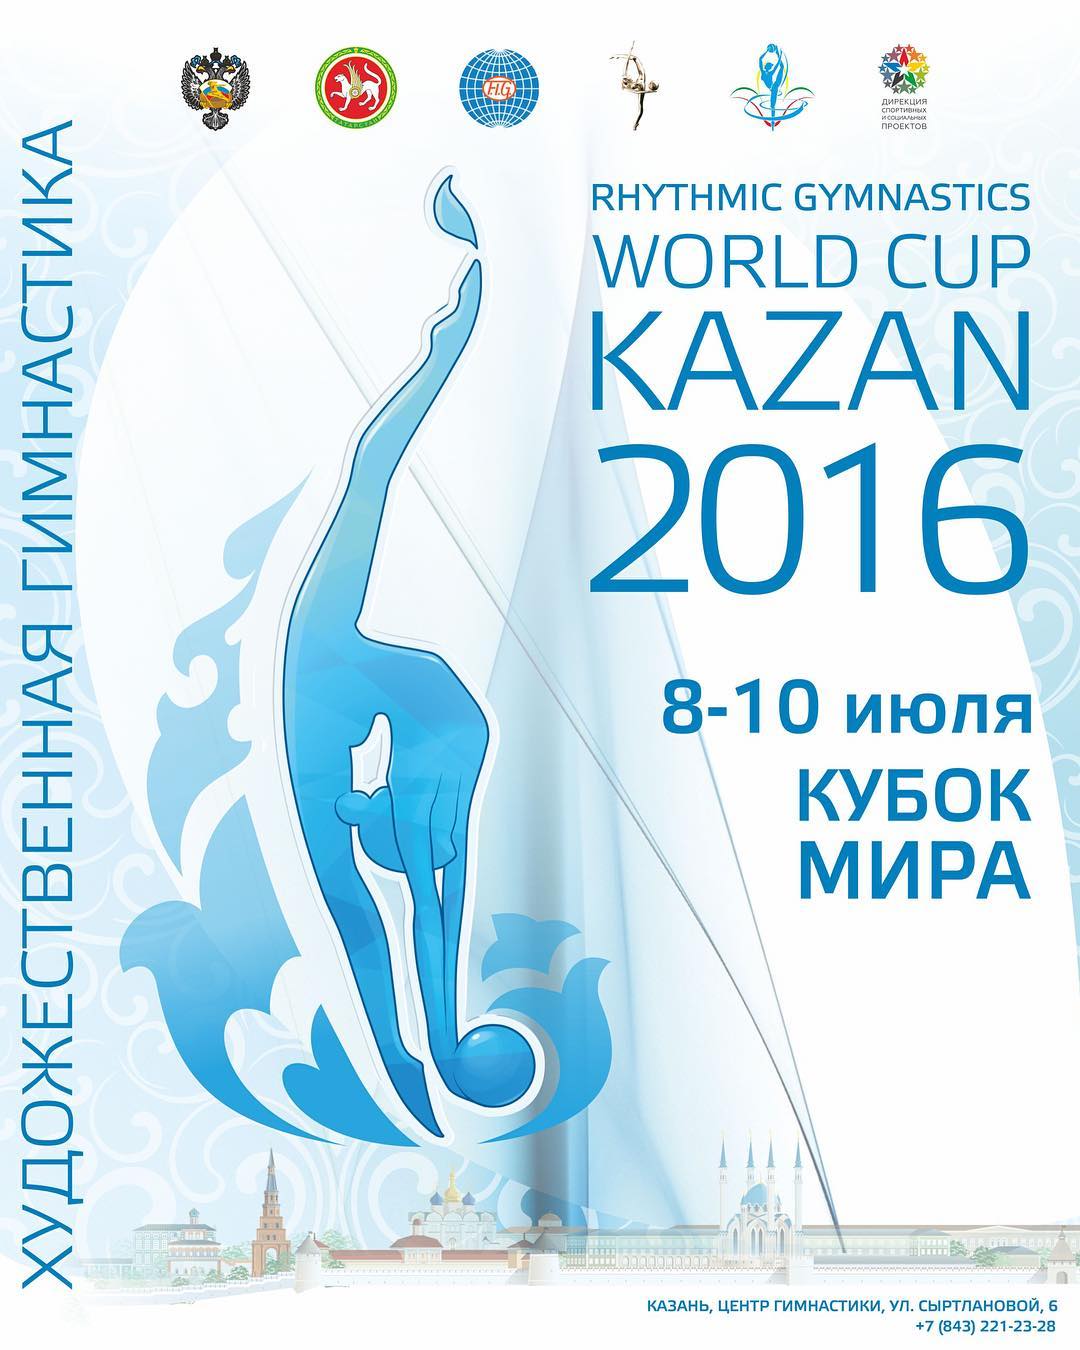 World Cup Kazan 2016 poster